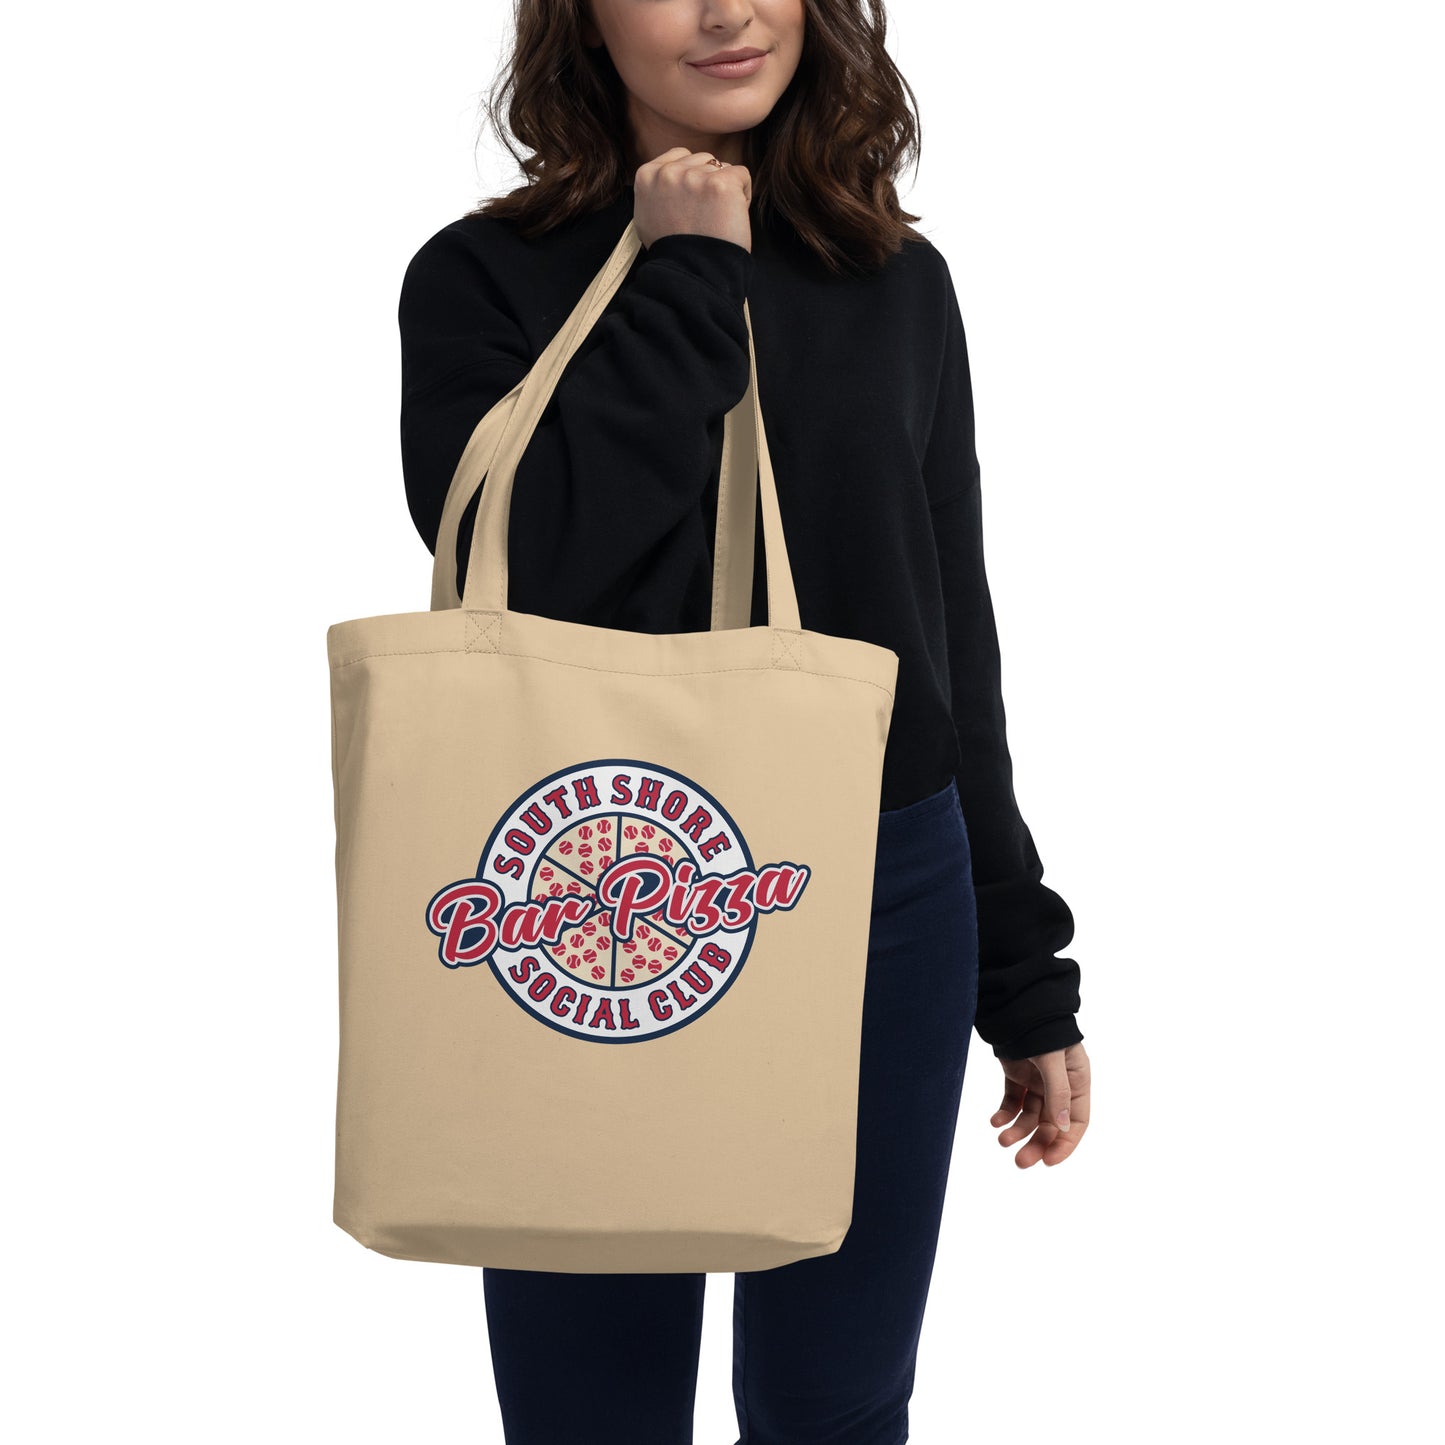 South Shore Bar Pizza Social Club Logo Takeout Tote Bag